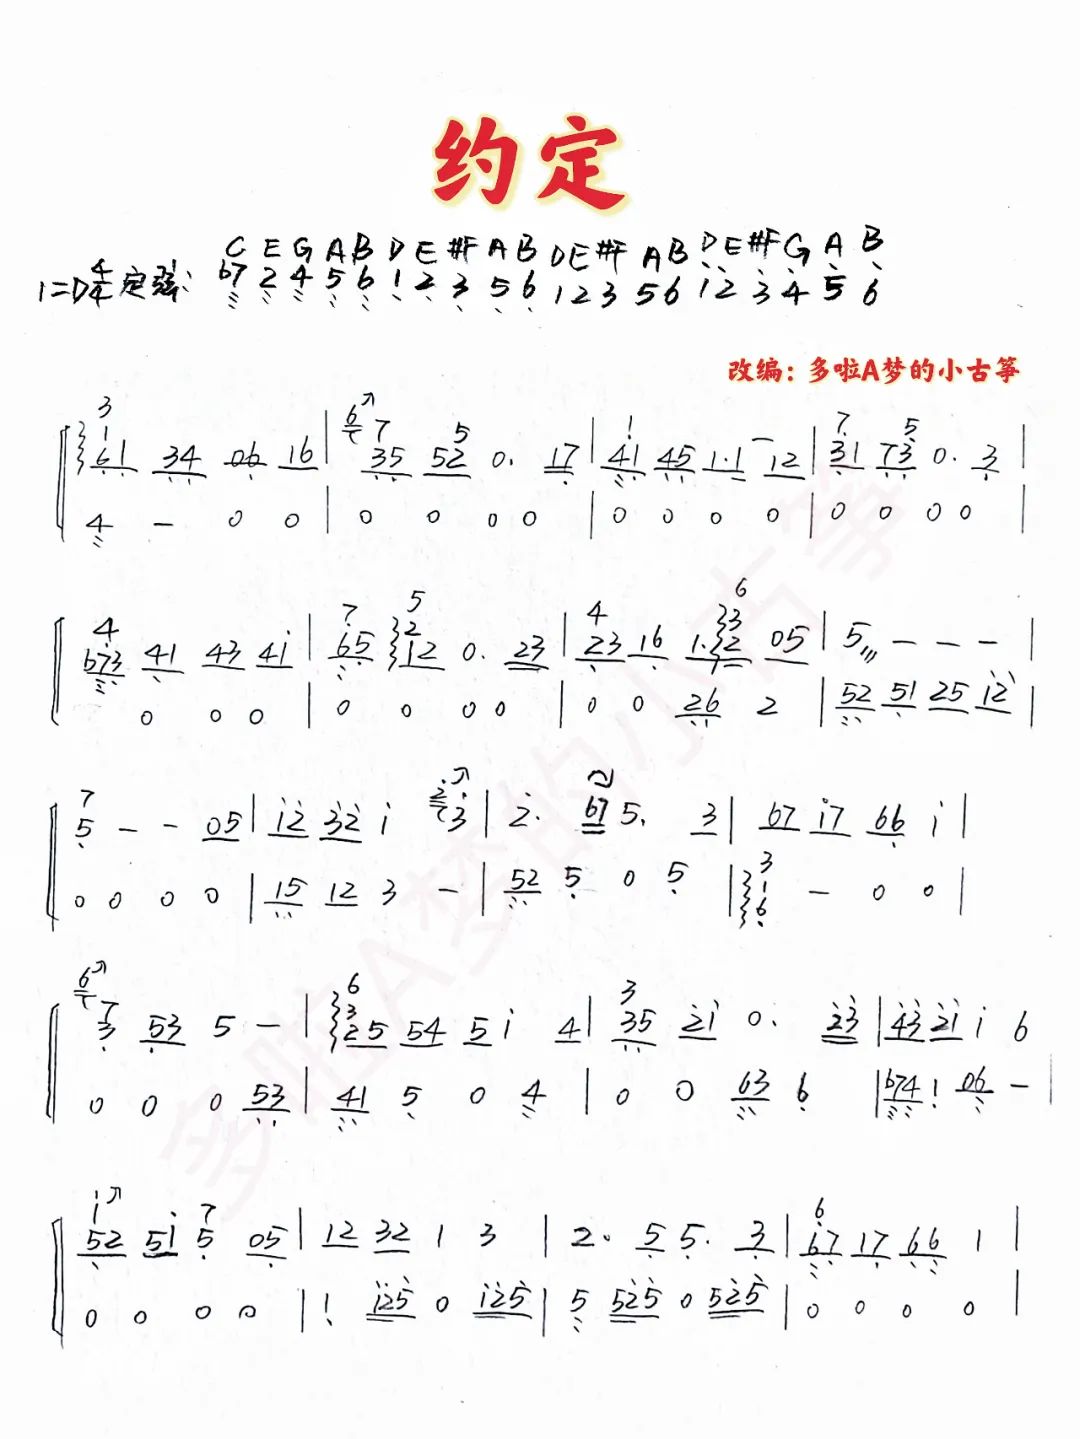 Agreement (Cantonese version)（guzheng sheet music）